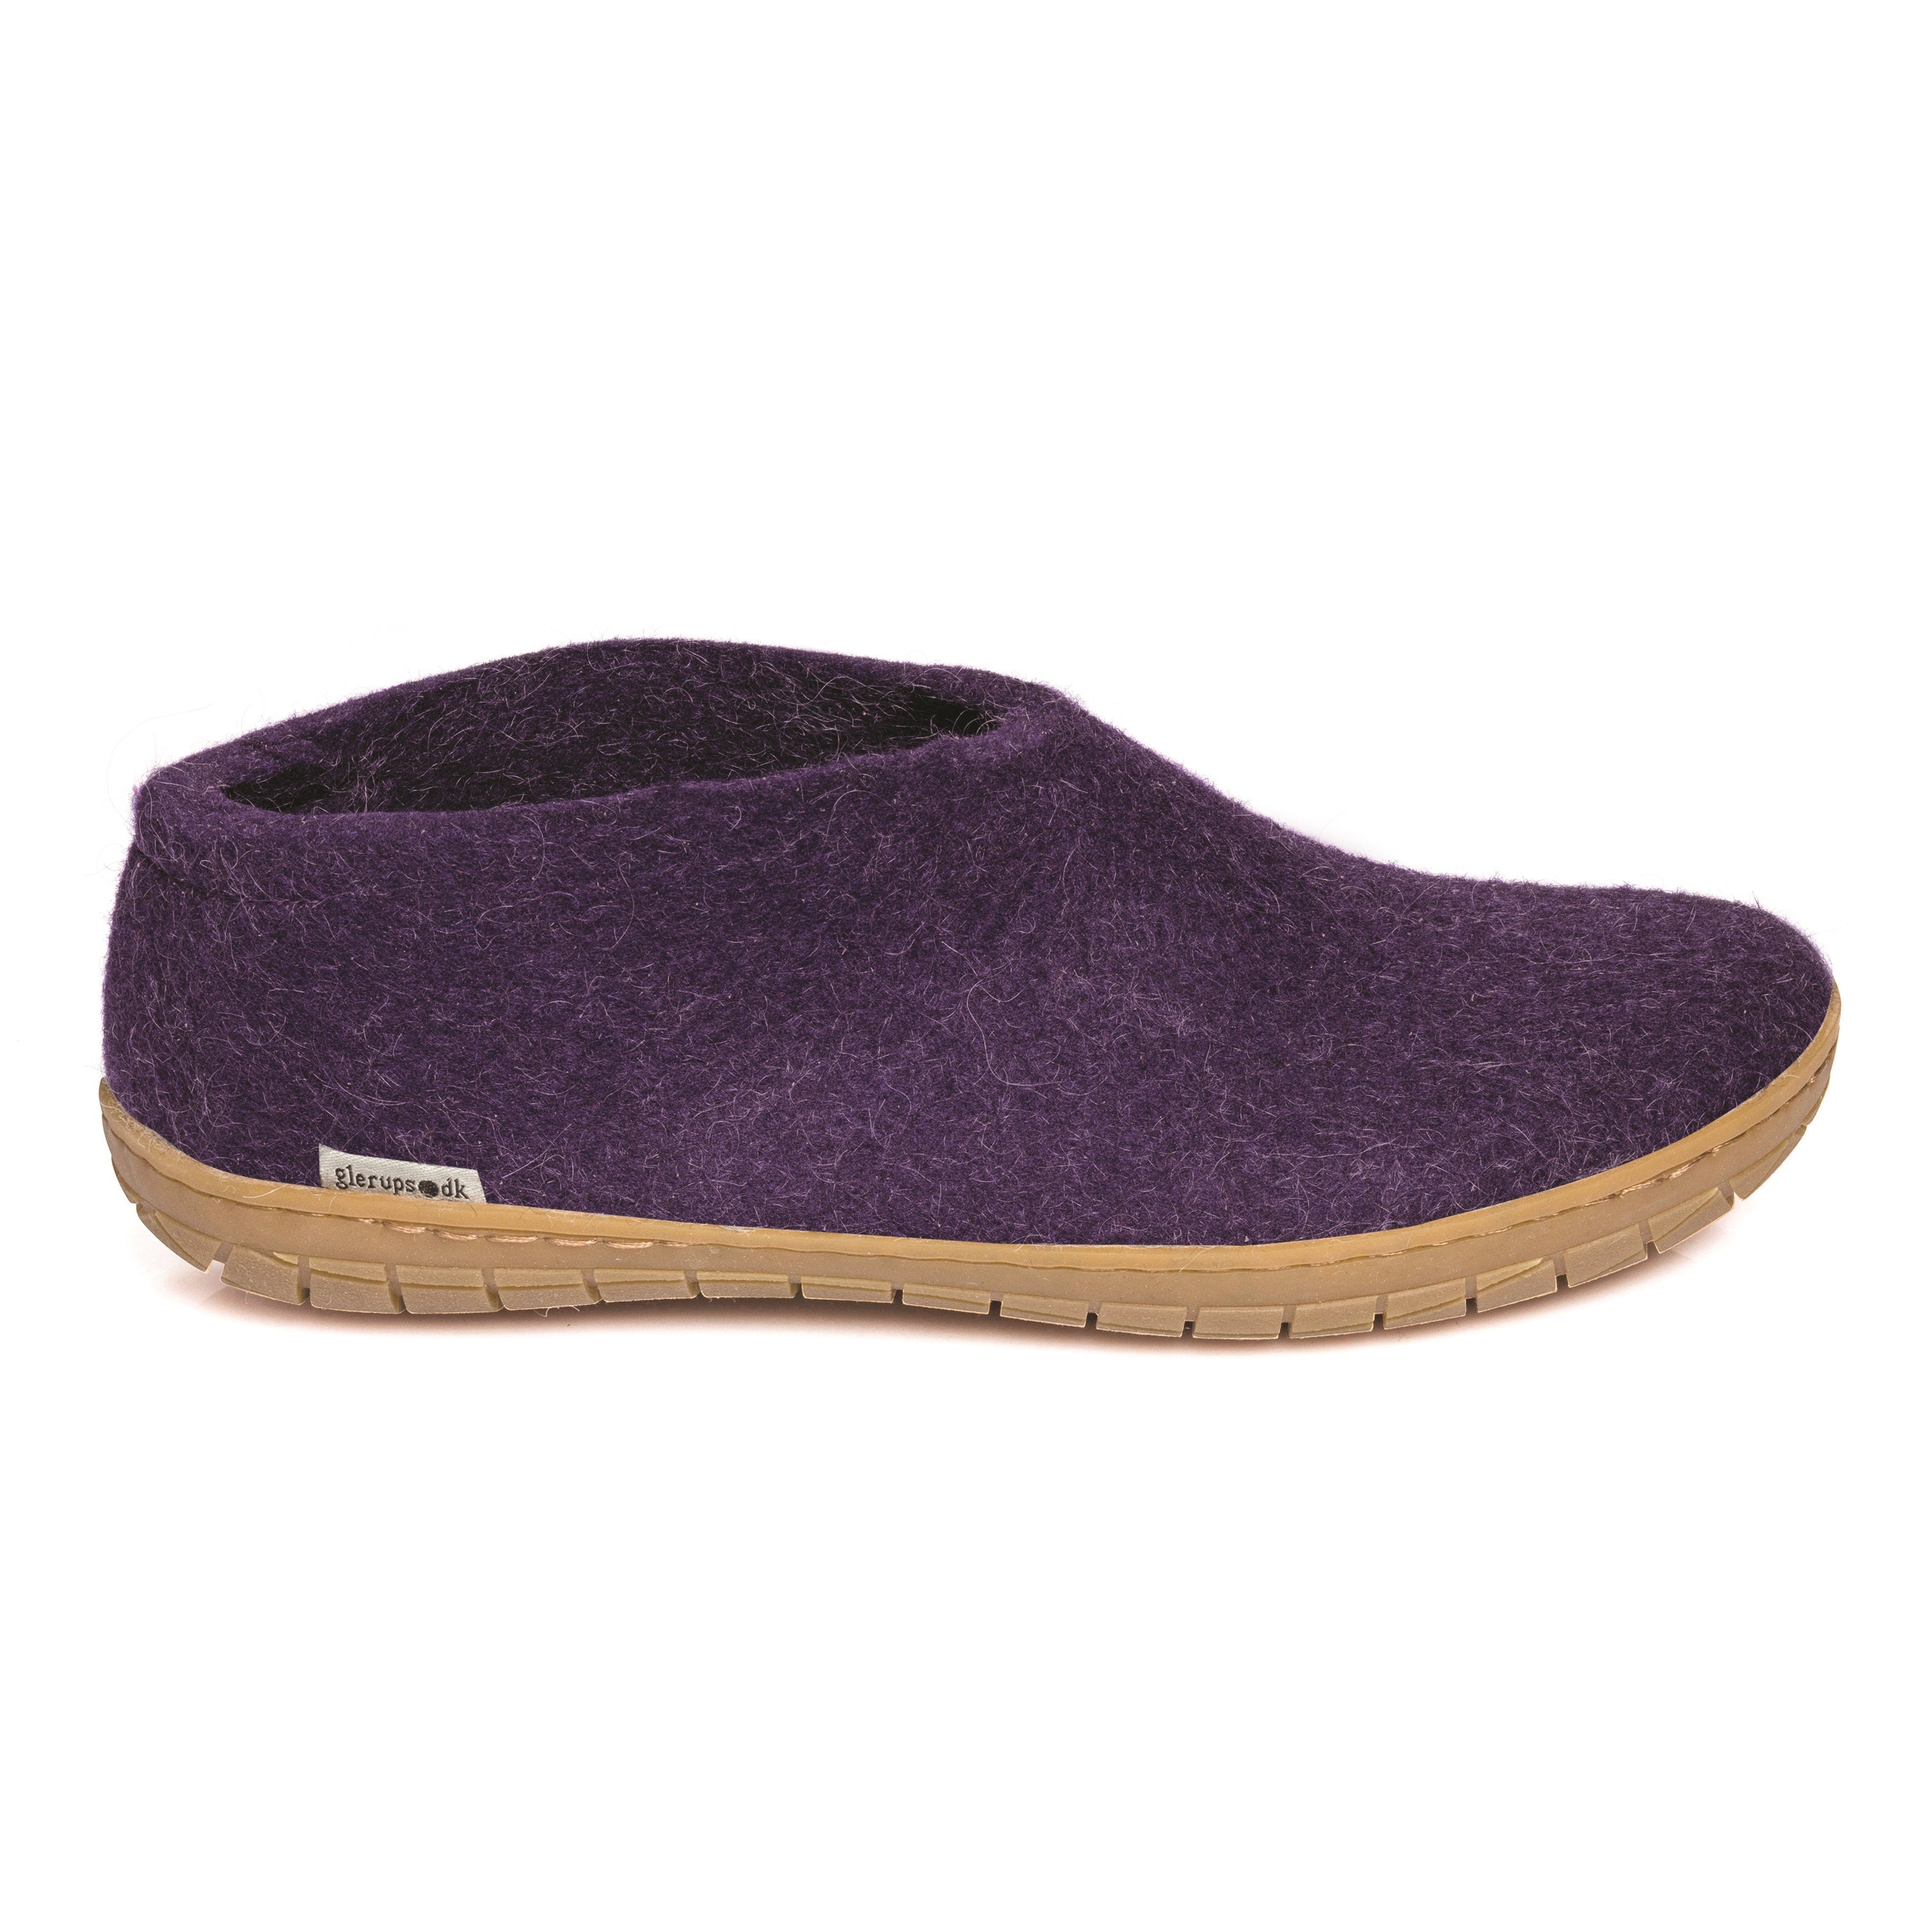 Glerups slipper shoe cut rubber sole purple